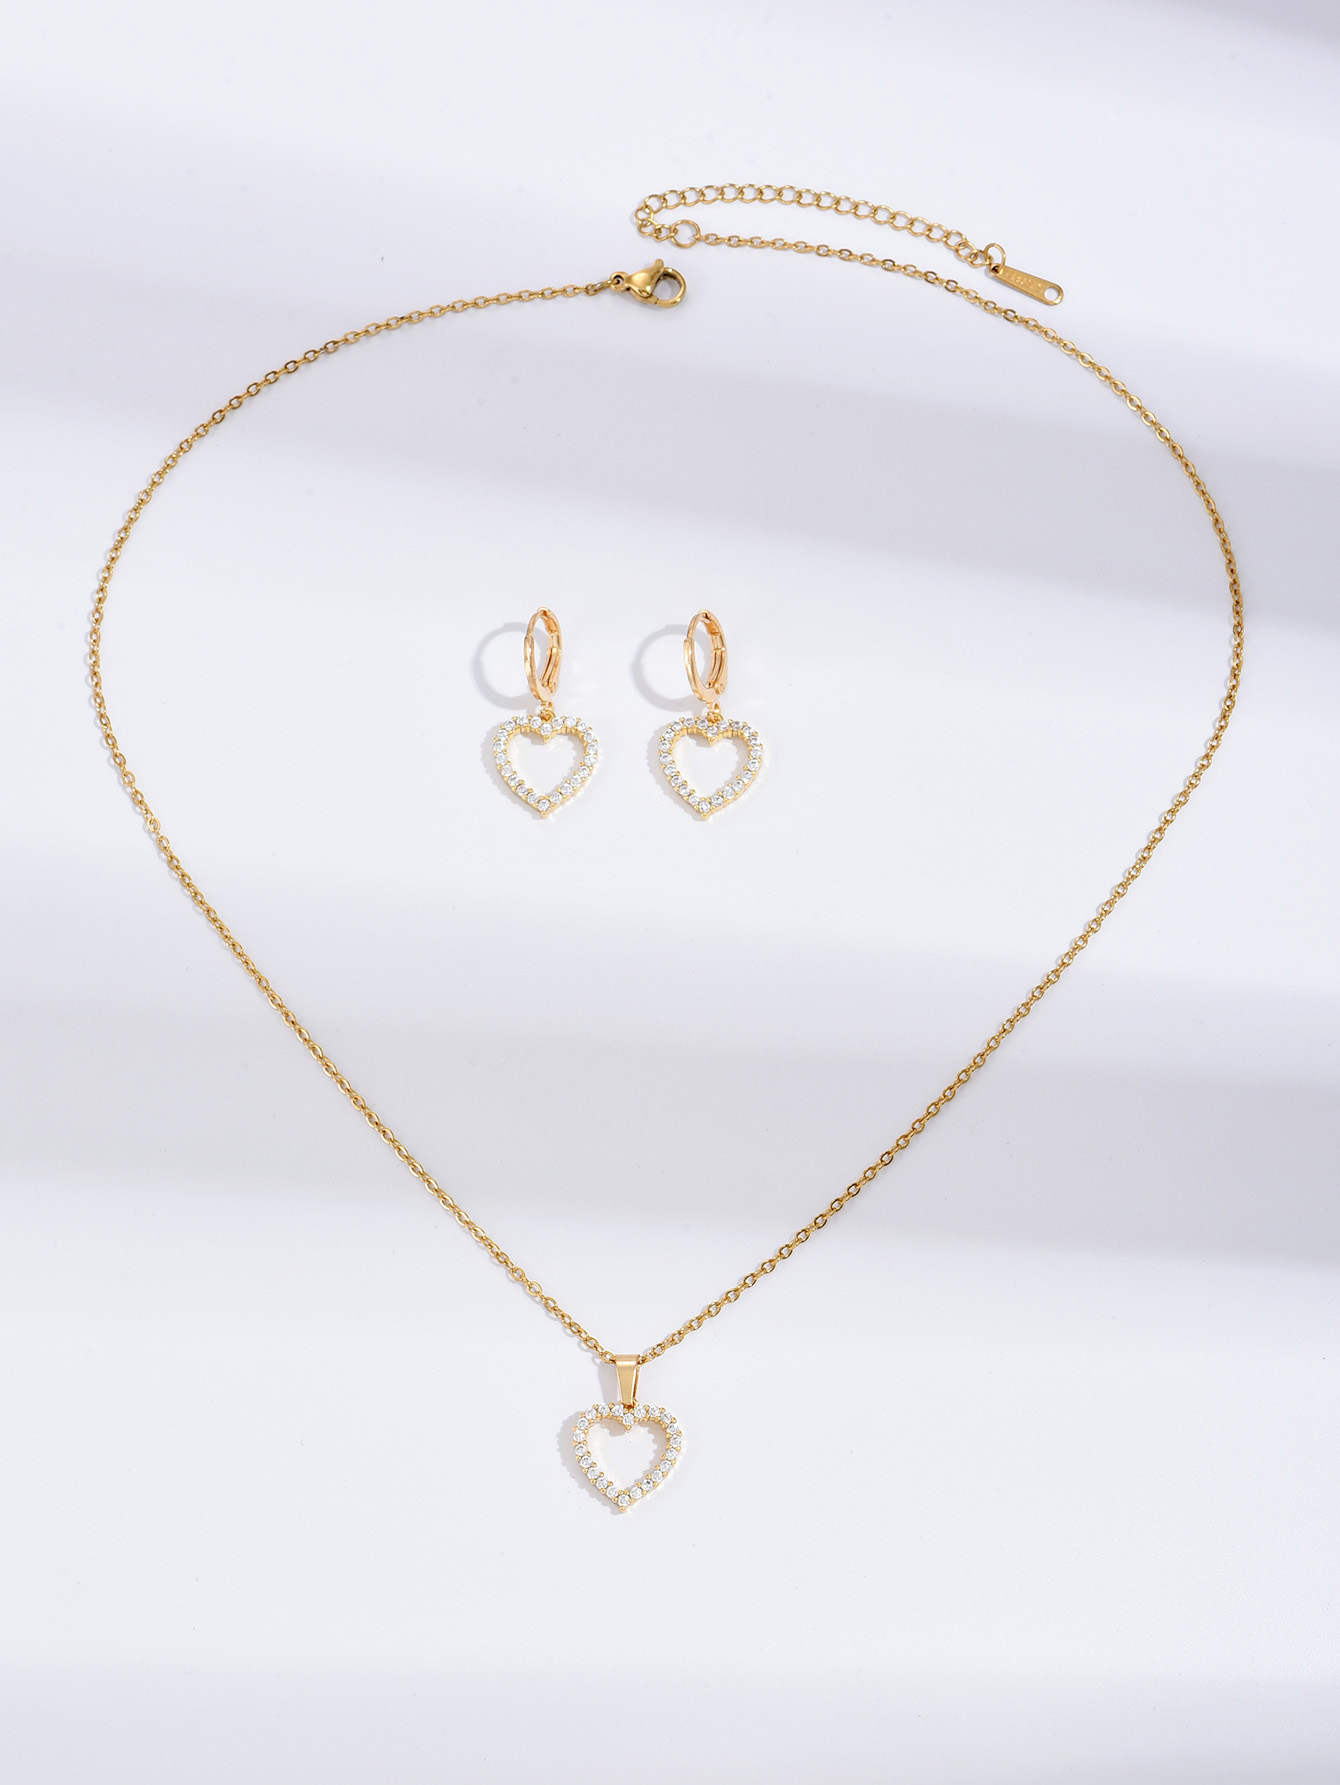 20 pcs - Love Heart Zircon Crystals Necklace and Huggies Earring Gold Tone 2 Pcs Jewellery Set - 10 Sets|GCJ382 |UK SELLER